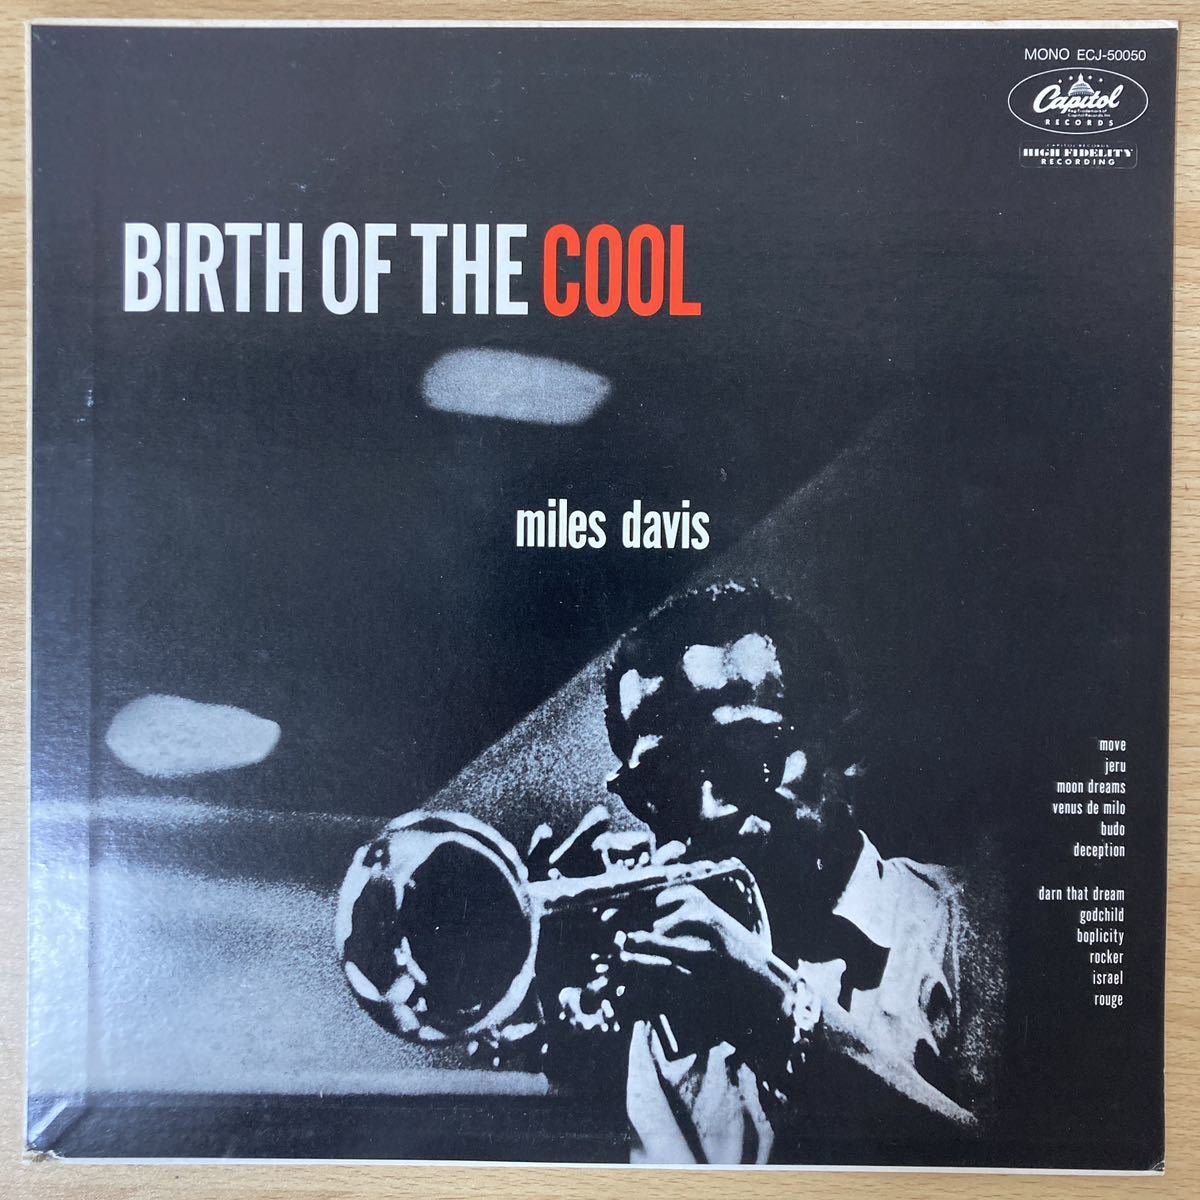 BIRTH OF THE COOL ECJ-50050 miles davis ジャズ JAZZ レコード ビンテージ レコード盤 LP LP盤  アナログ盤 音出し確認済み ア 3863 JChere雅虎拍卖代购